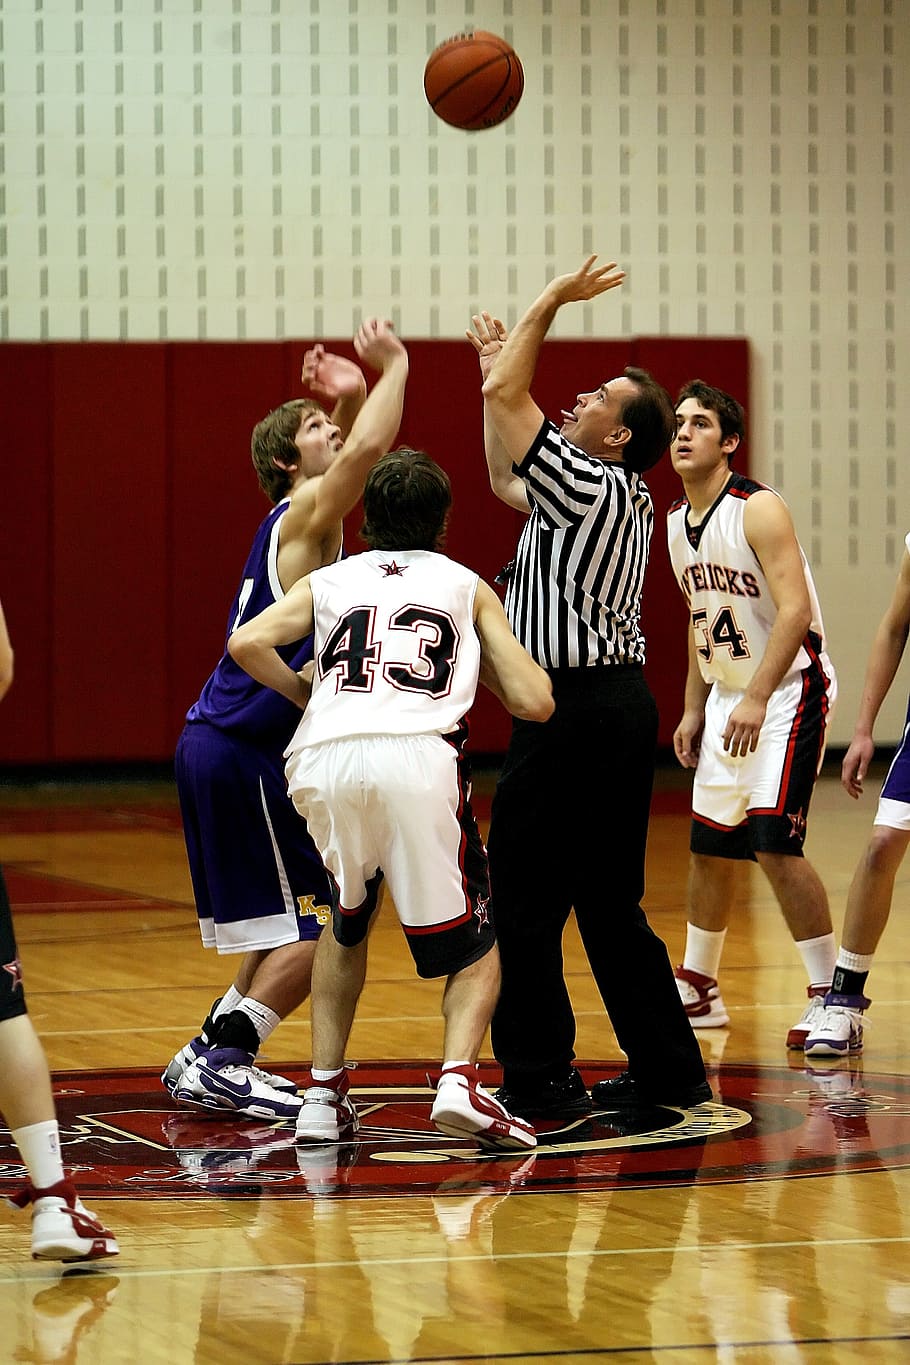 bola basket, bola lompat, permainan, aksi, bola, lompat, aktif, bermain, olahraga, kompetisi